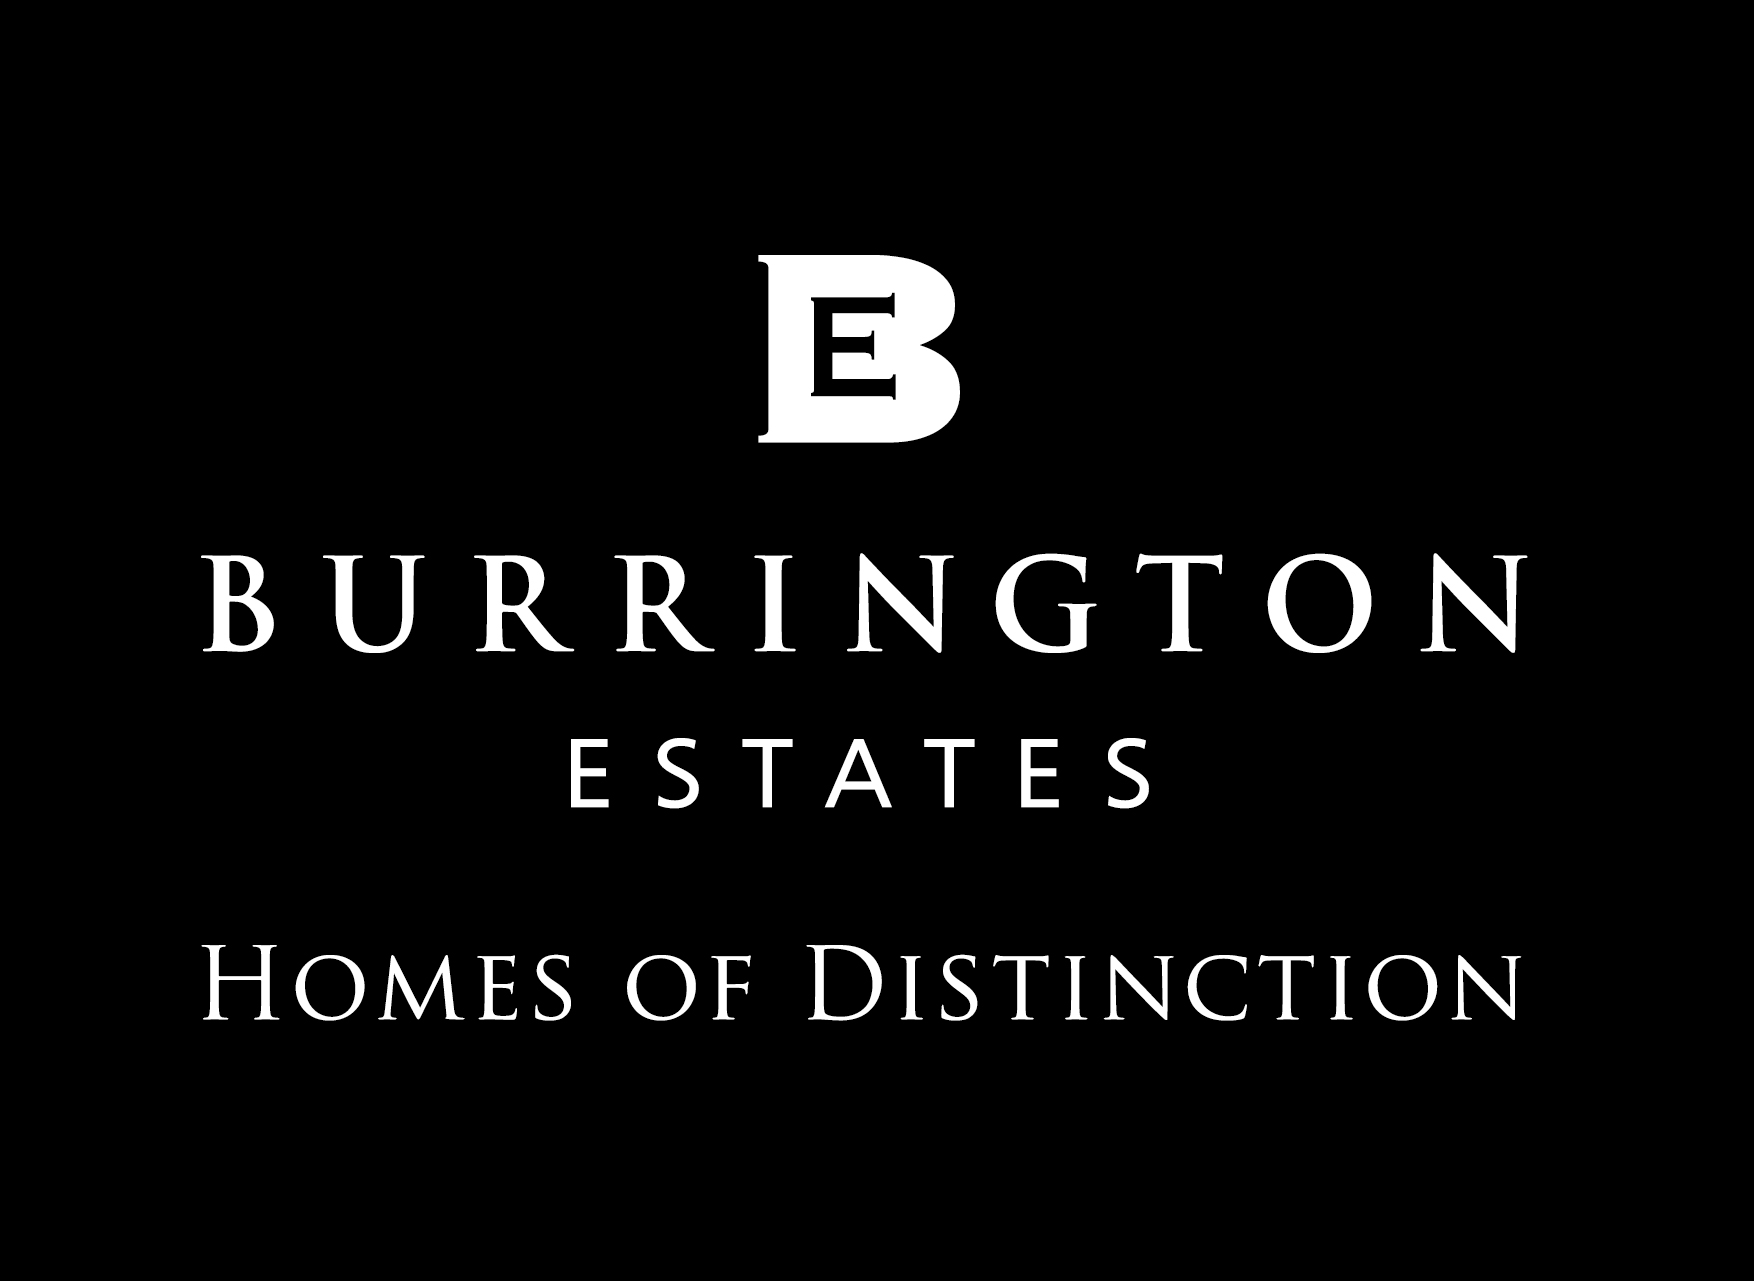 Work Experience at Burrington Estates New Homes